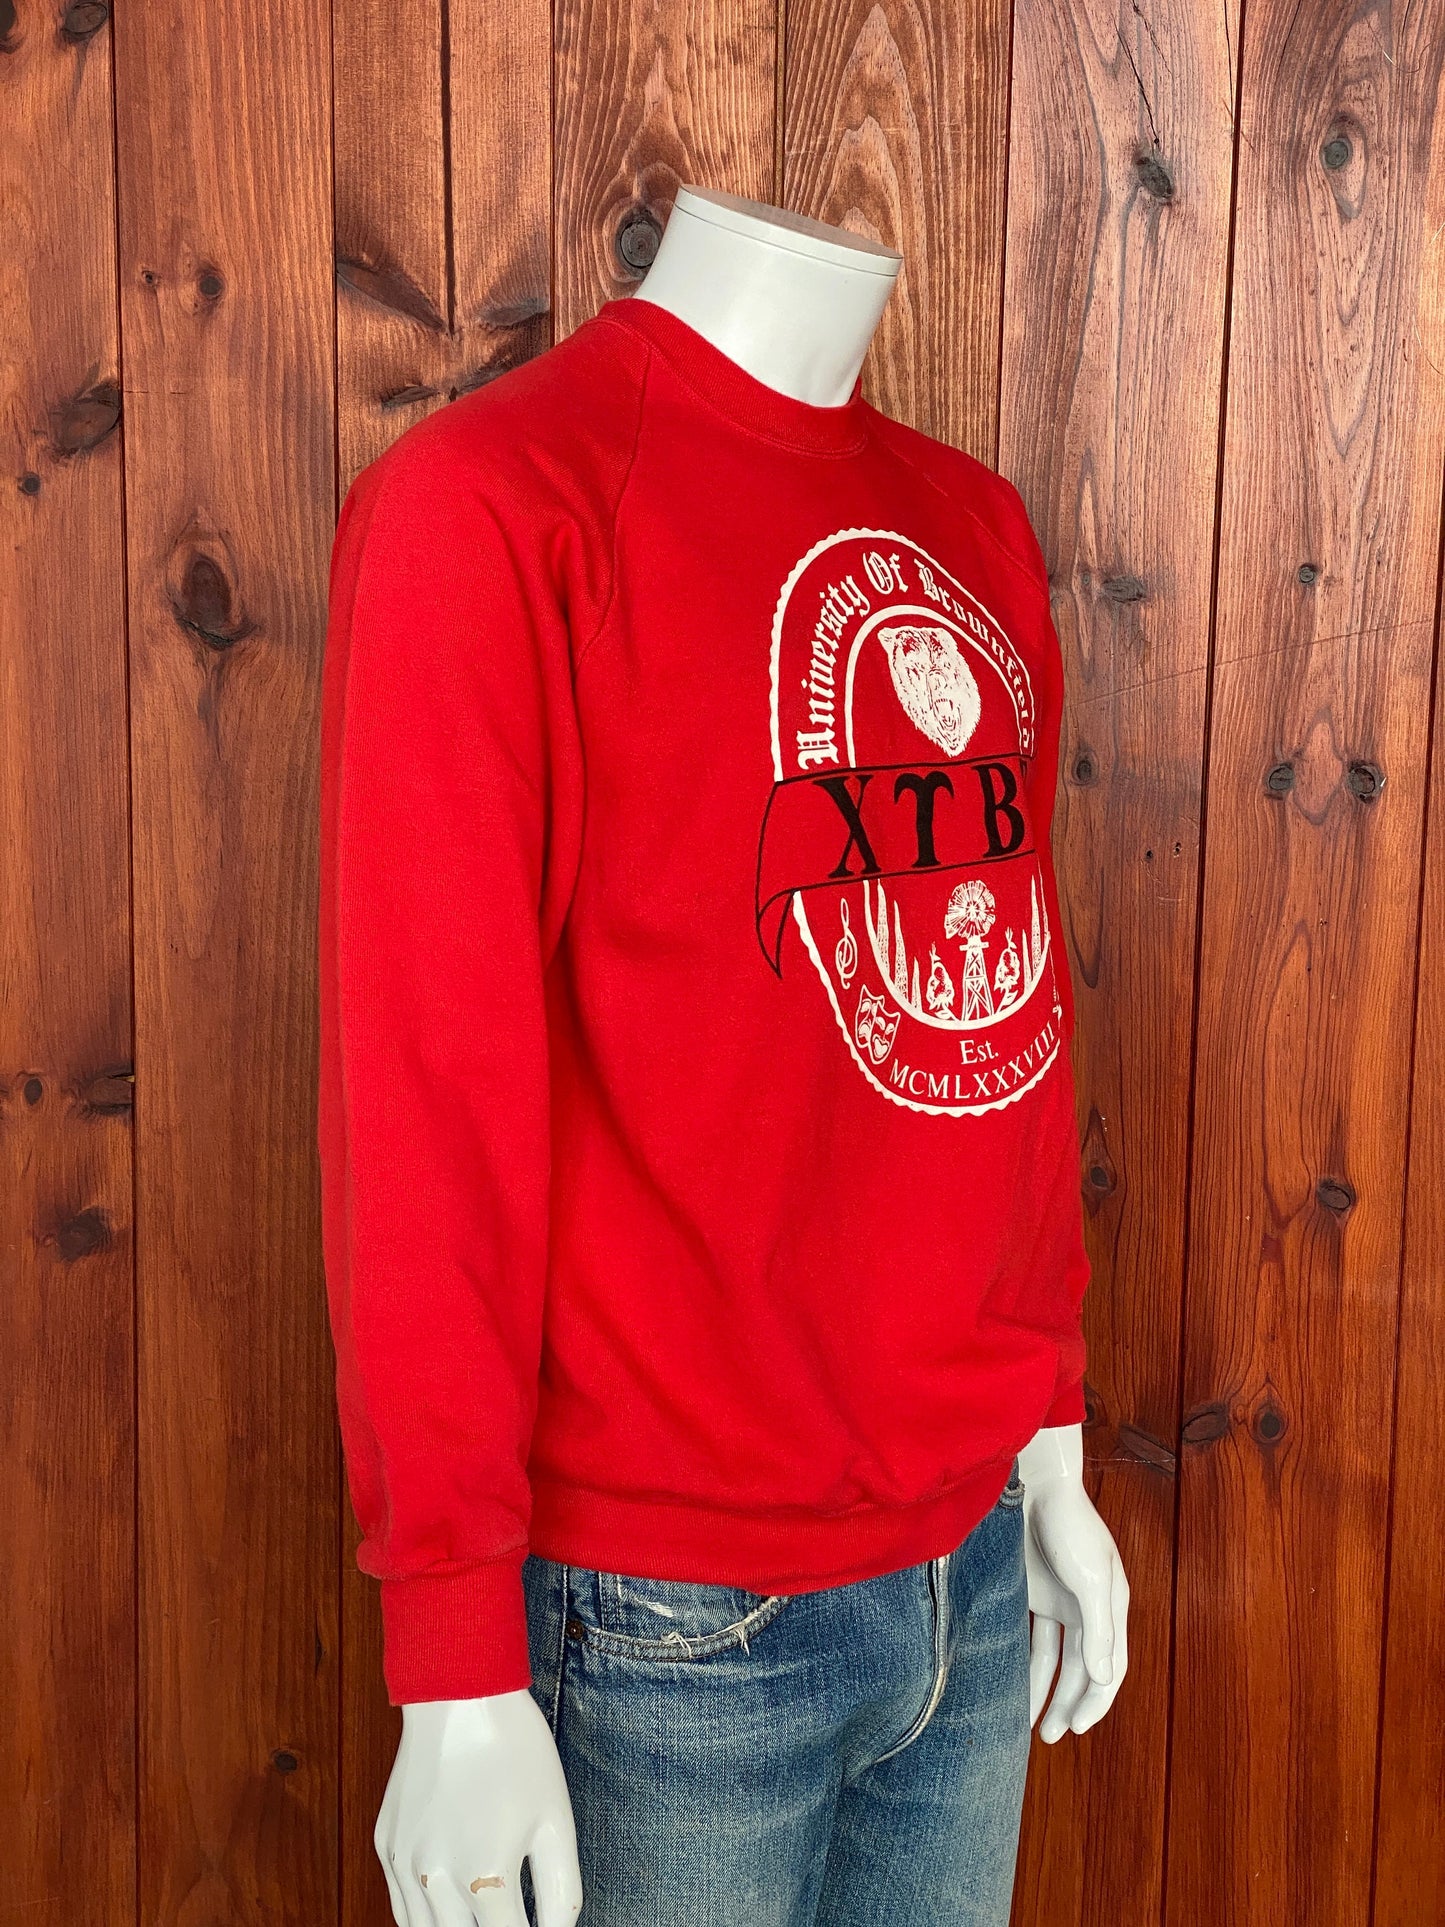 XL. 80s Vintage University of Brownfield sweatshirt Made In USA